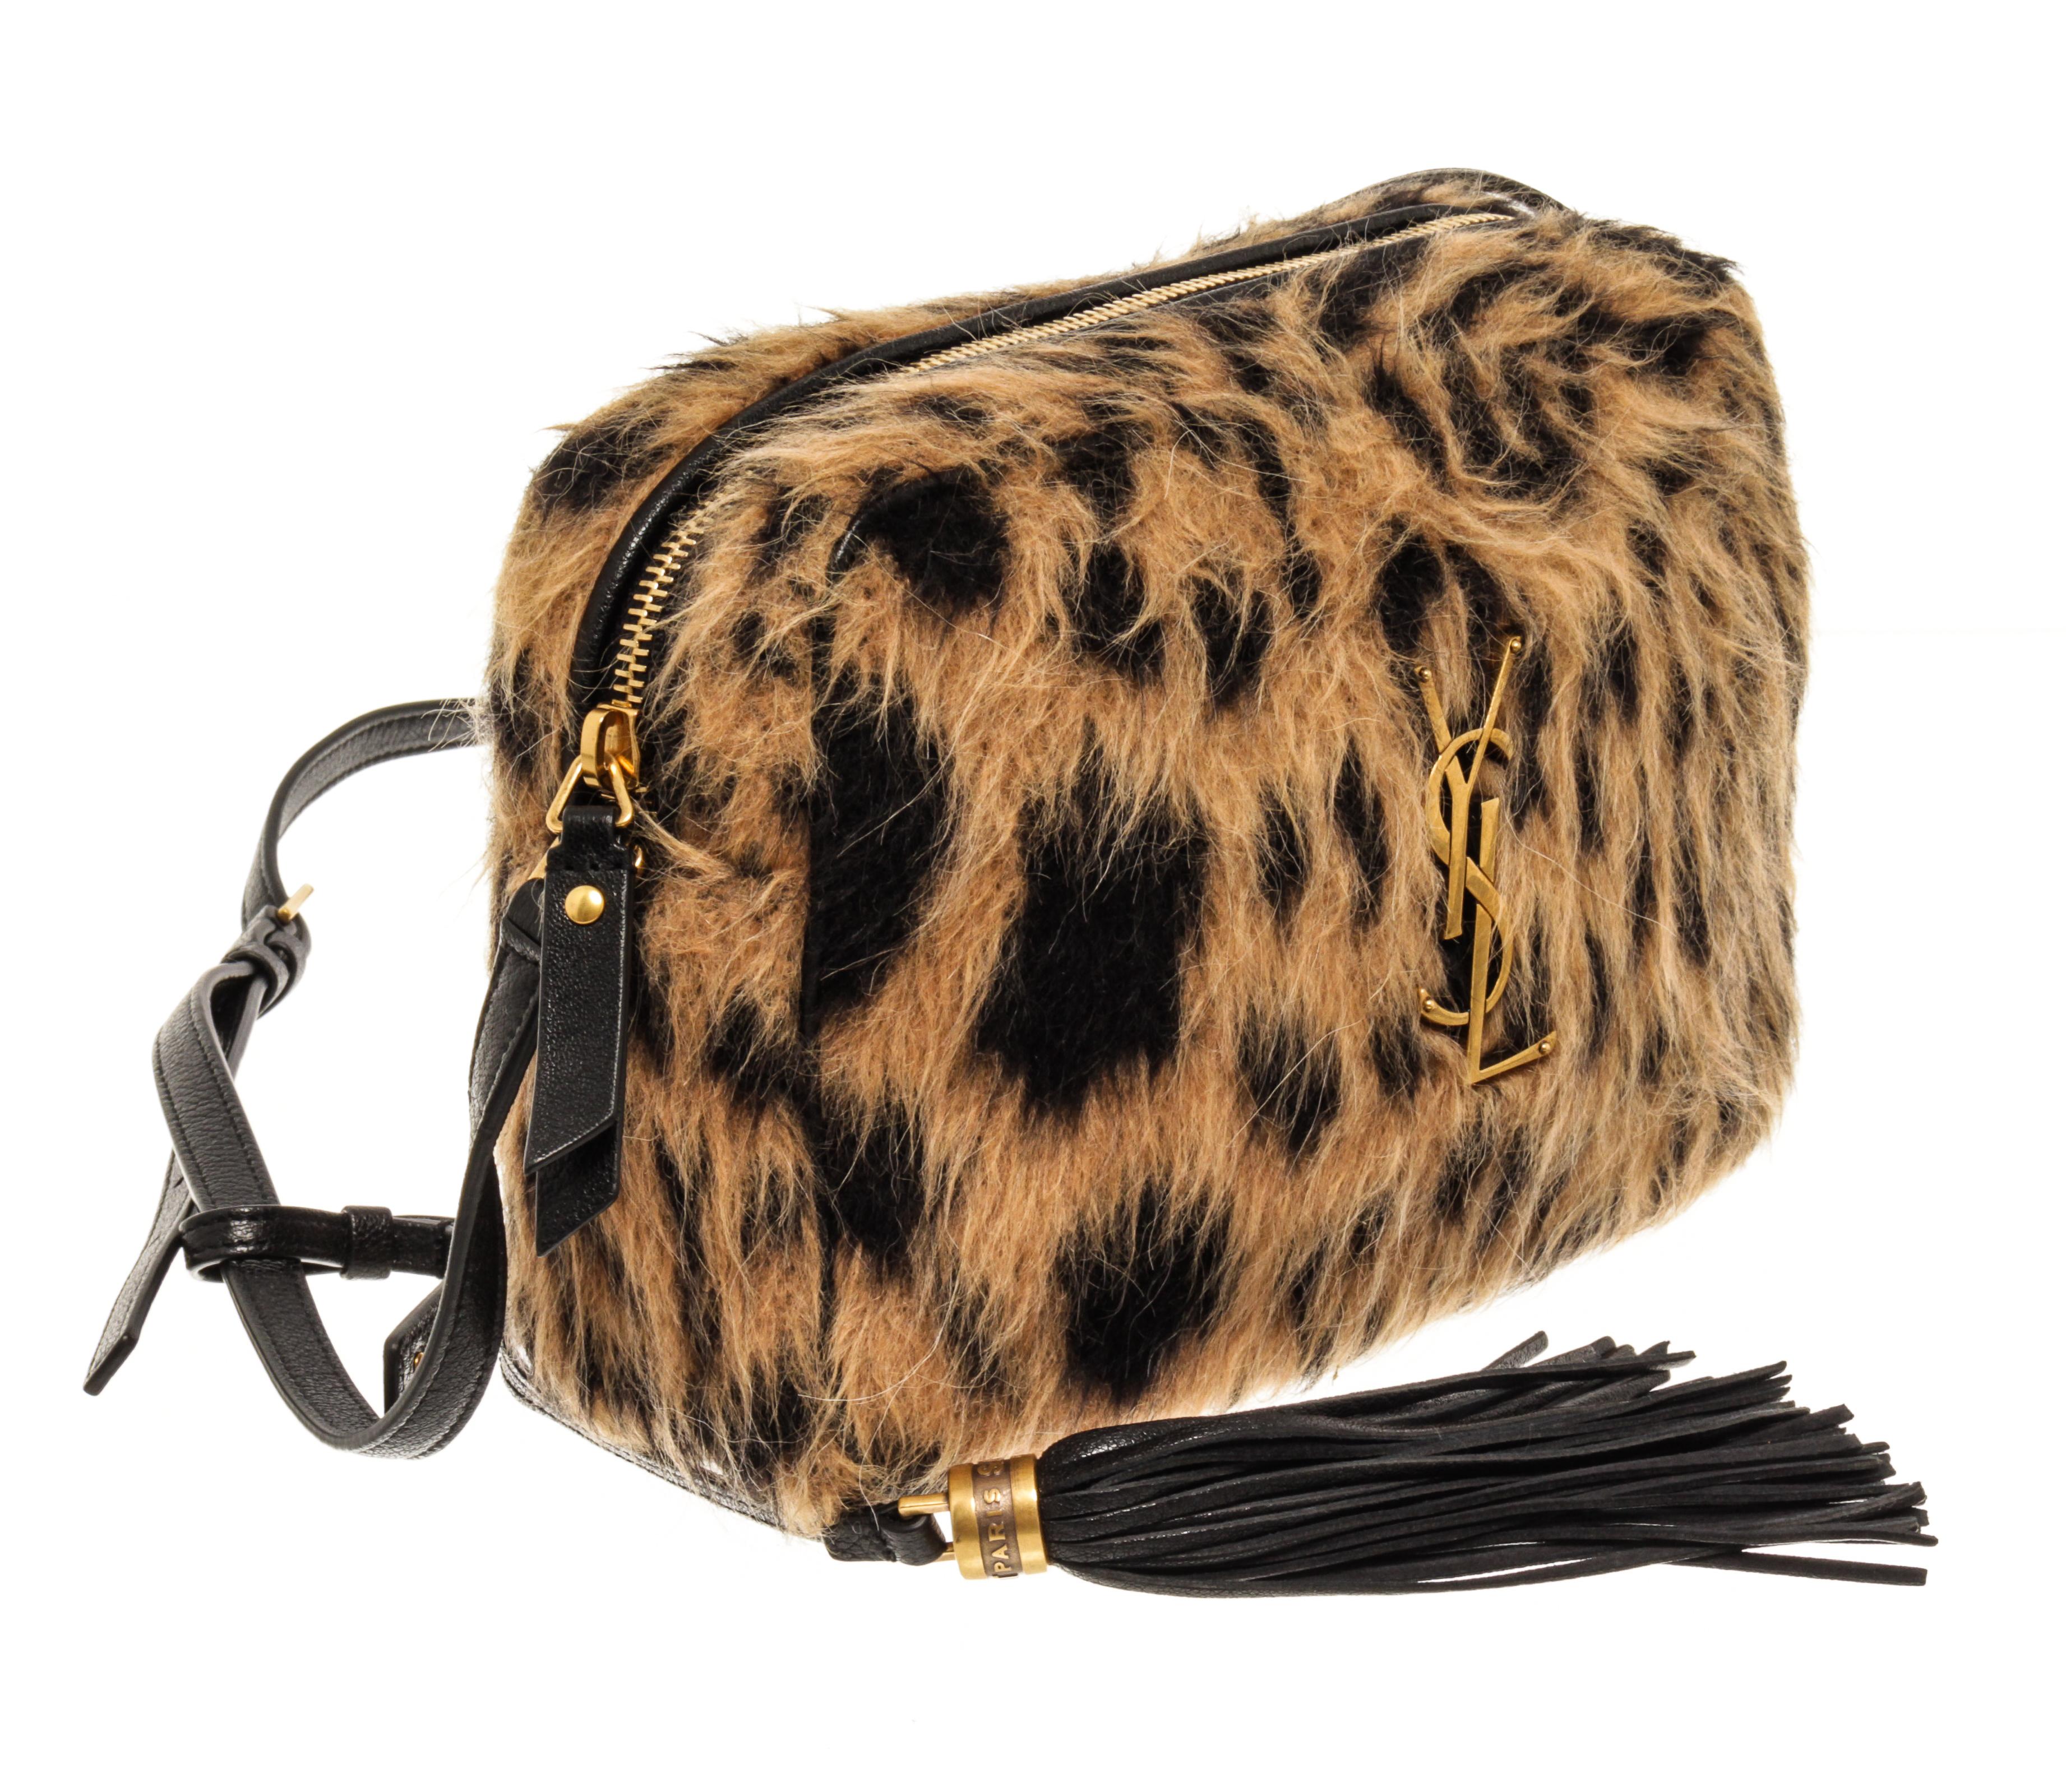 Yves Saint Laurent Cheetah Print Camera Bag with adjustable strap, zipper closure and fabric lining.

49347MSC